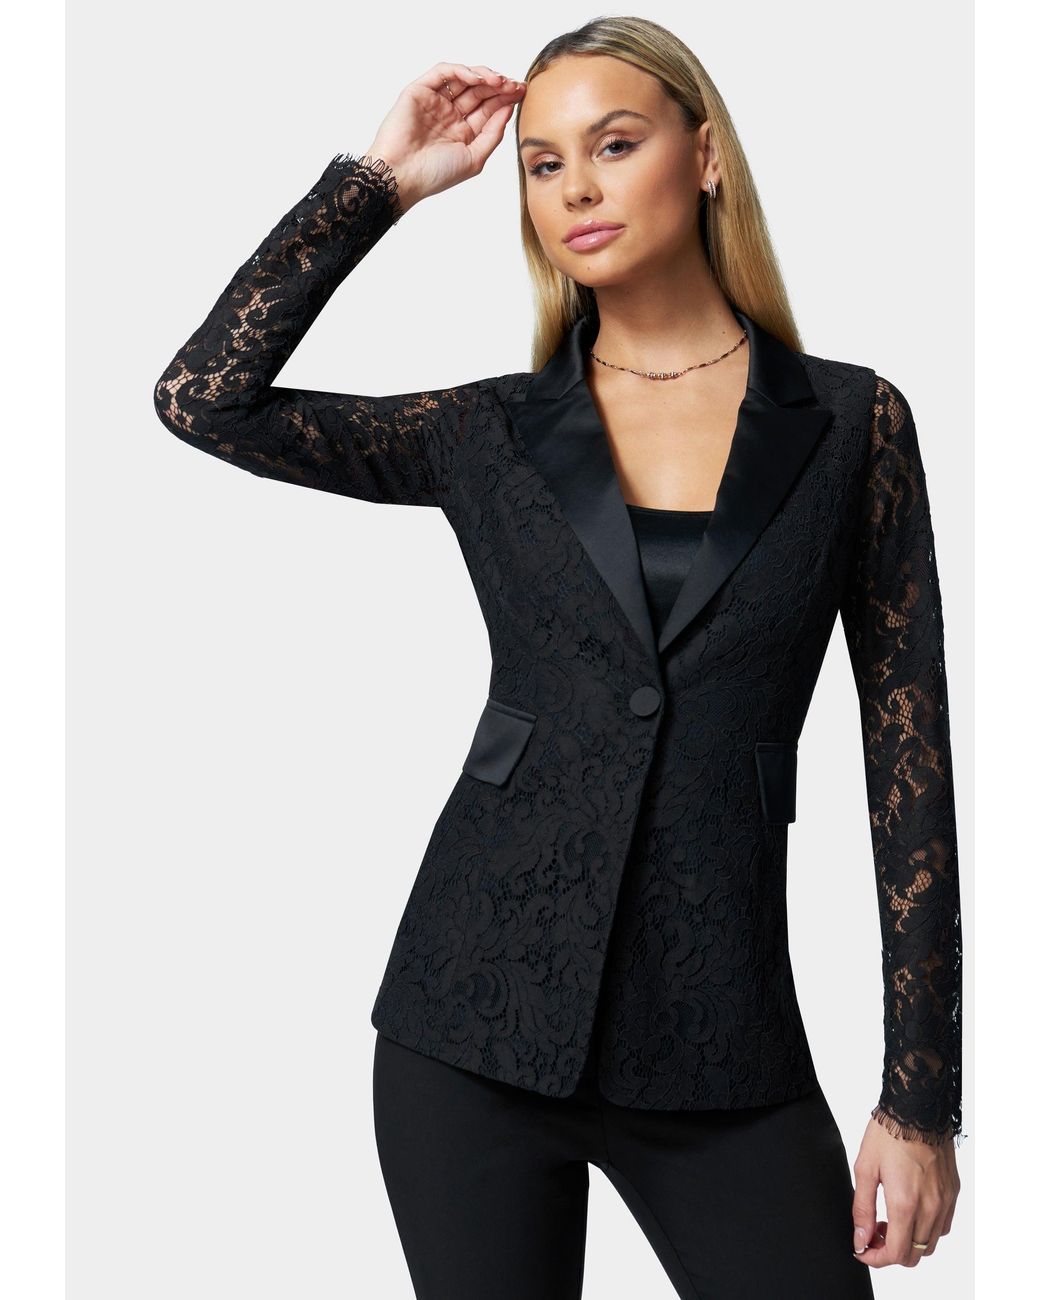 Bebe Satin Lace Tailored Blazer Jacket in Black